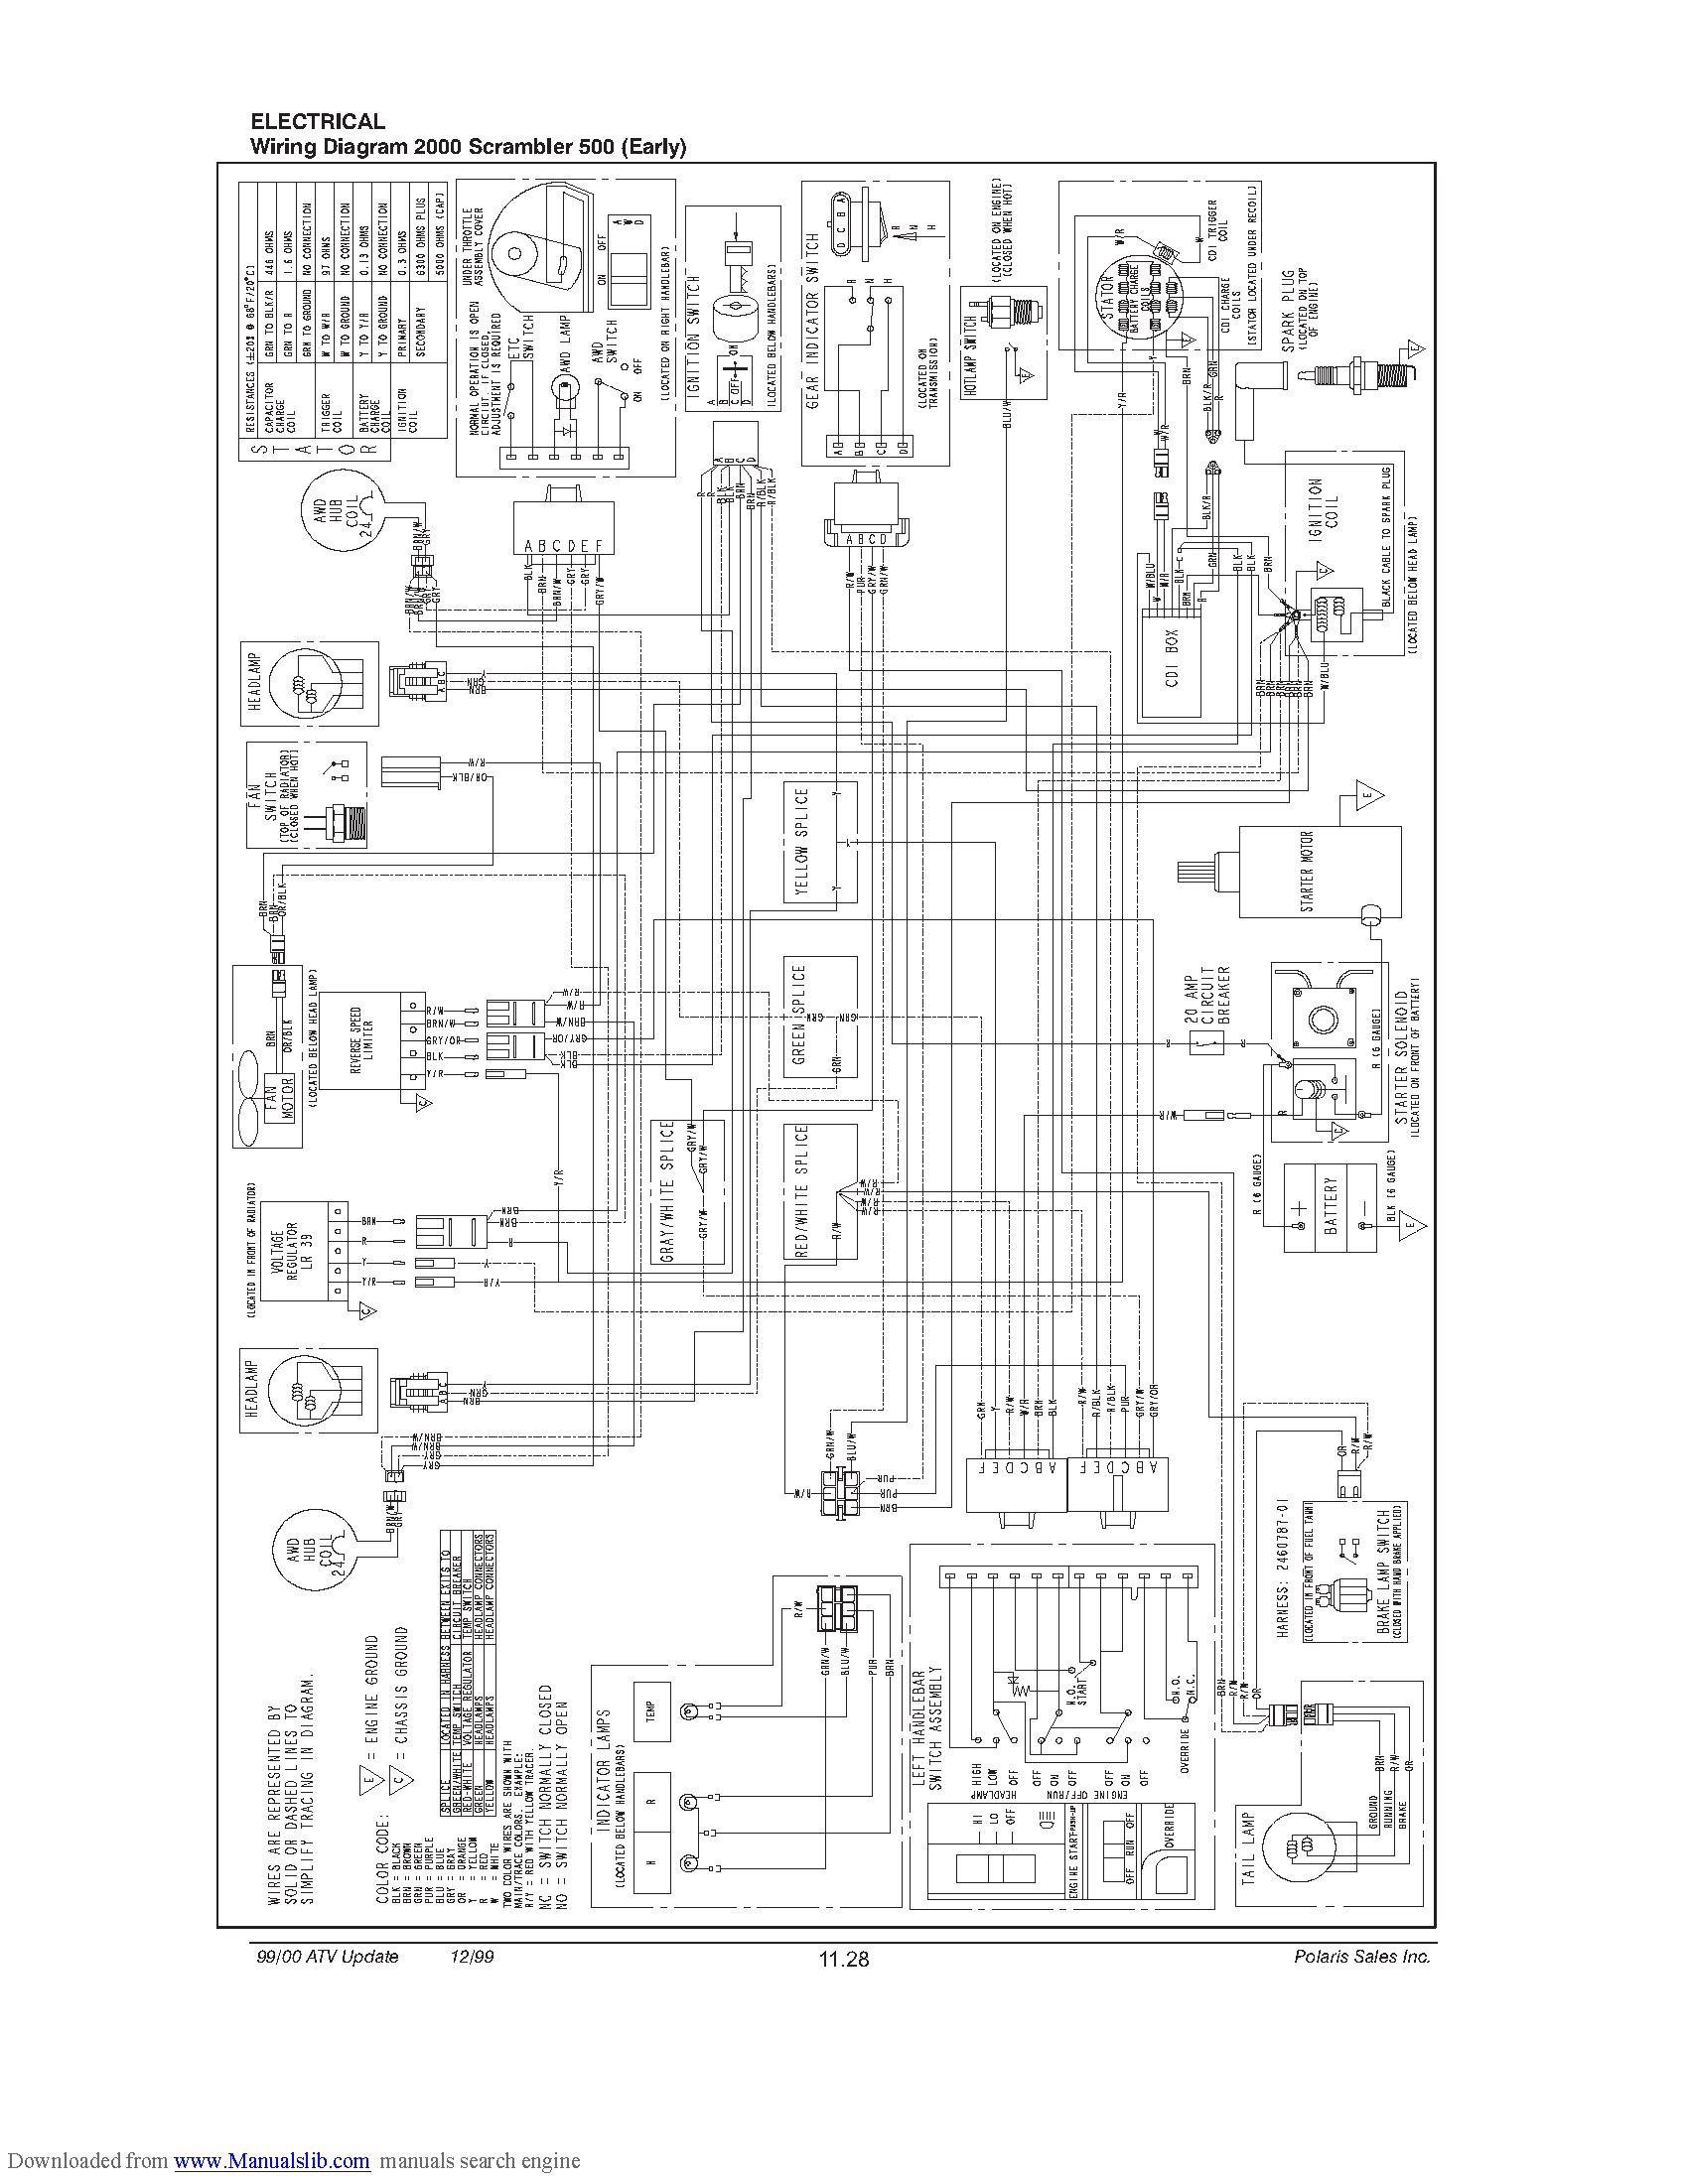 Diagram Polaris Sportsman 500 Wiring Diagram Pdf Wiring Diagram Full Version Hd Quality Wiring Diagram Umldiagramclass Blimunde It